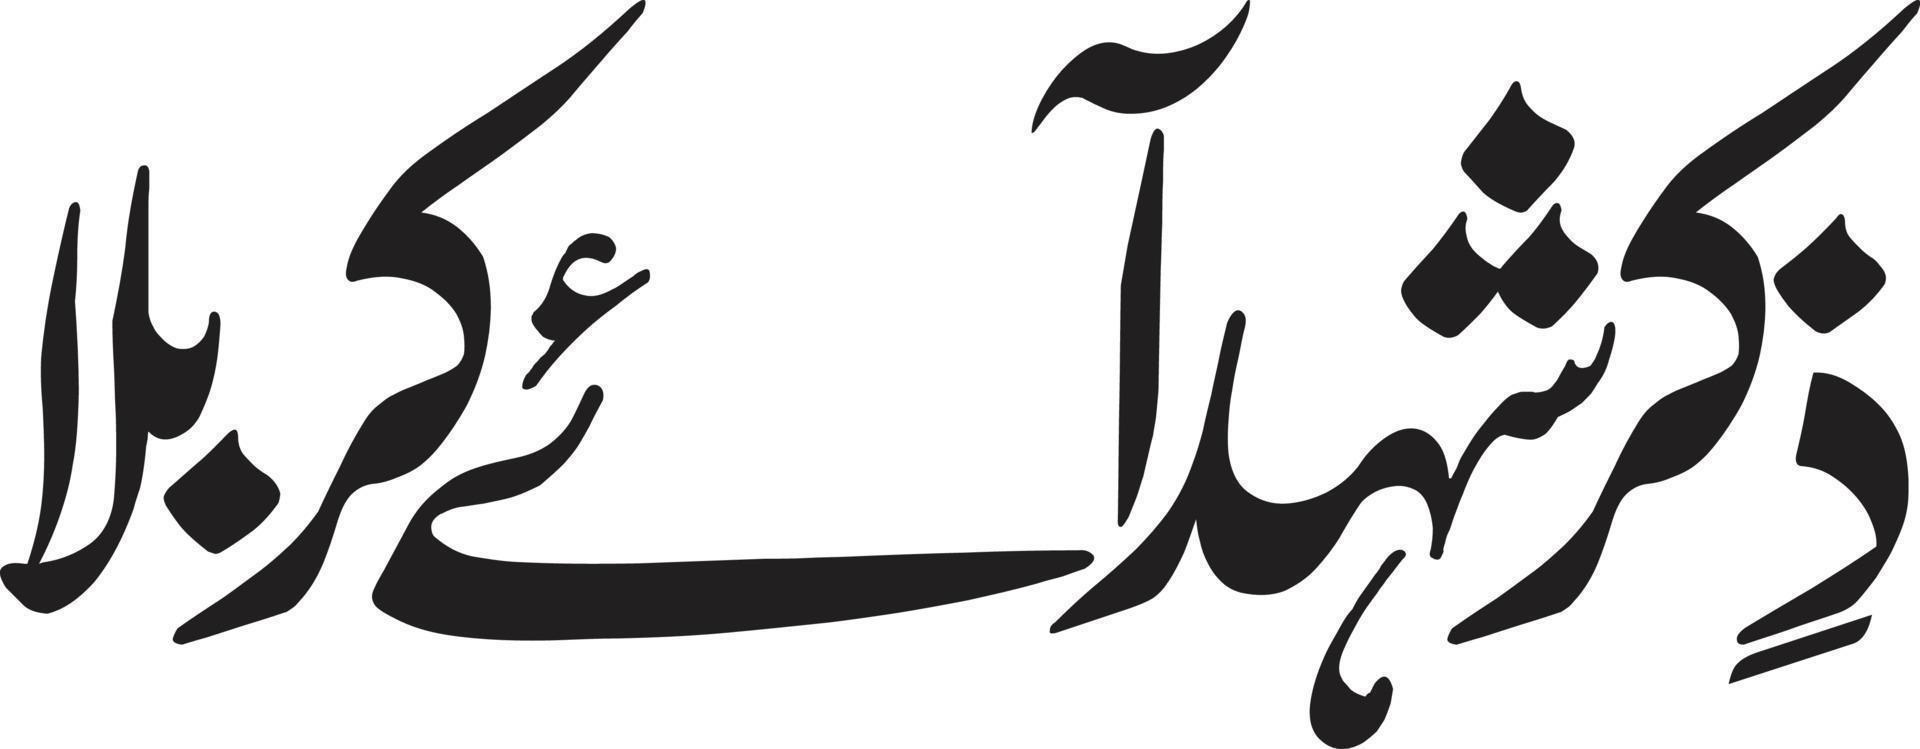 Ziker Sheed Aey Karbla islamic urdu calligraphy Free Vector